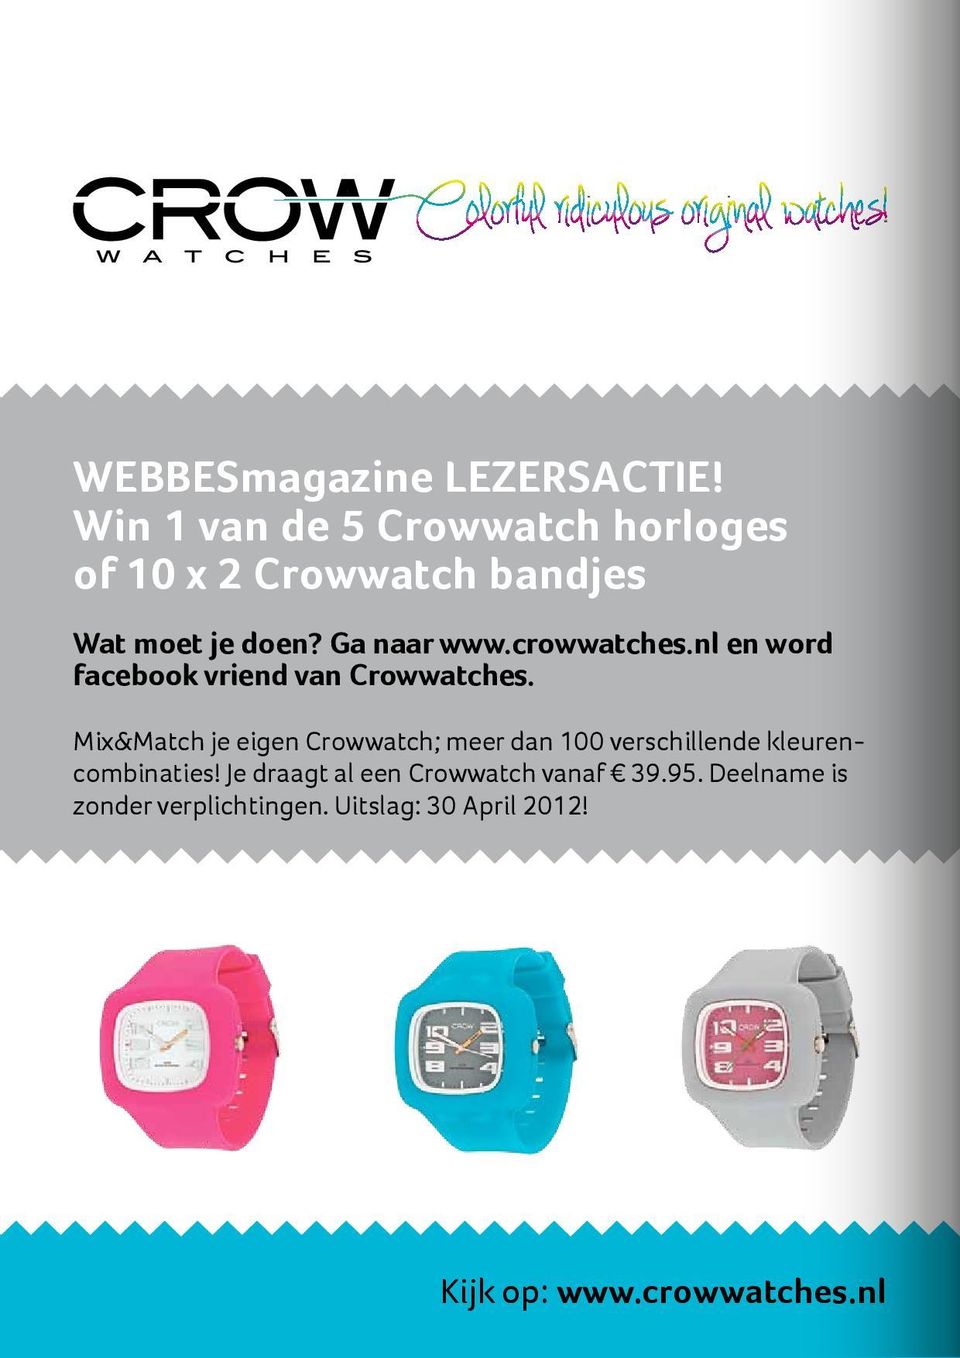 crowwatches.nl en word facebook vriend van Crowwatches.